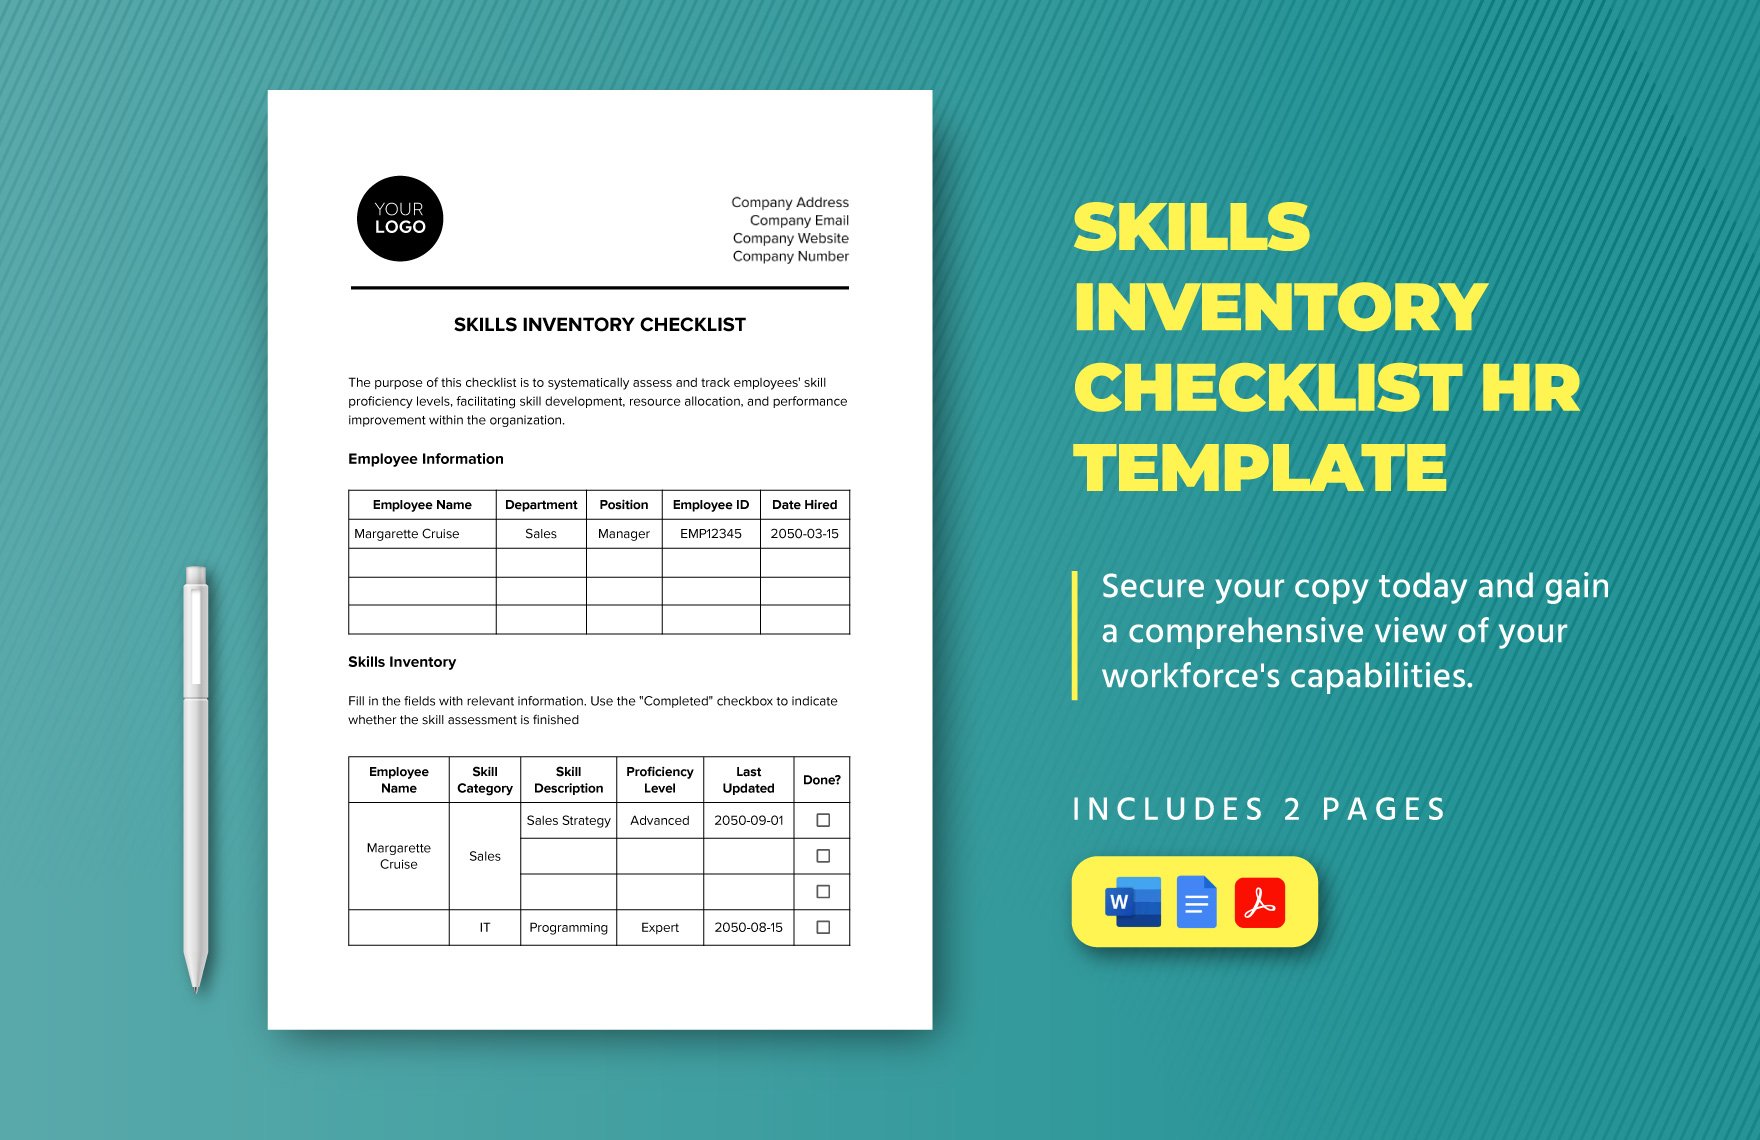 Skills Inventory Checklist HR Template in Word, Google Docs, PDF